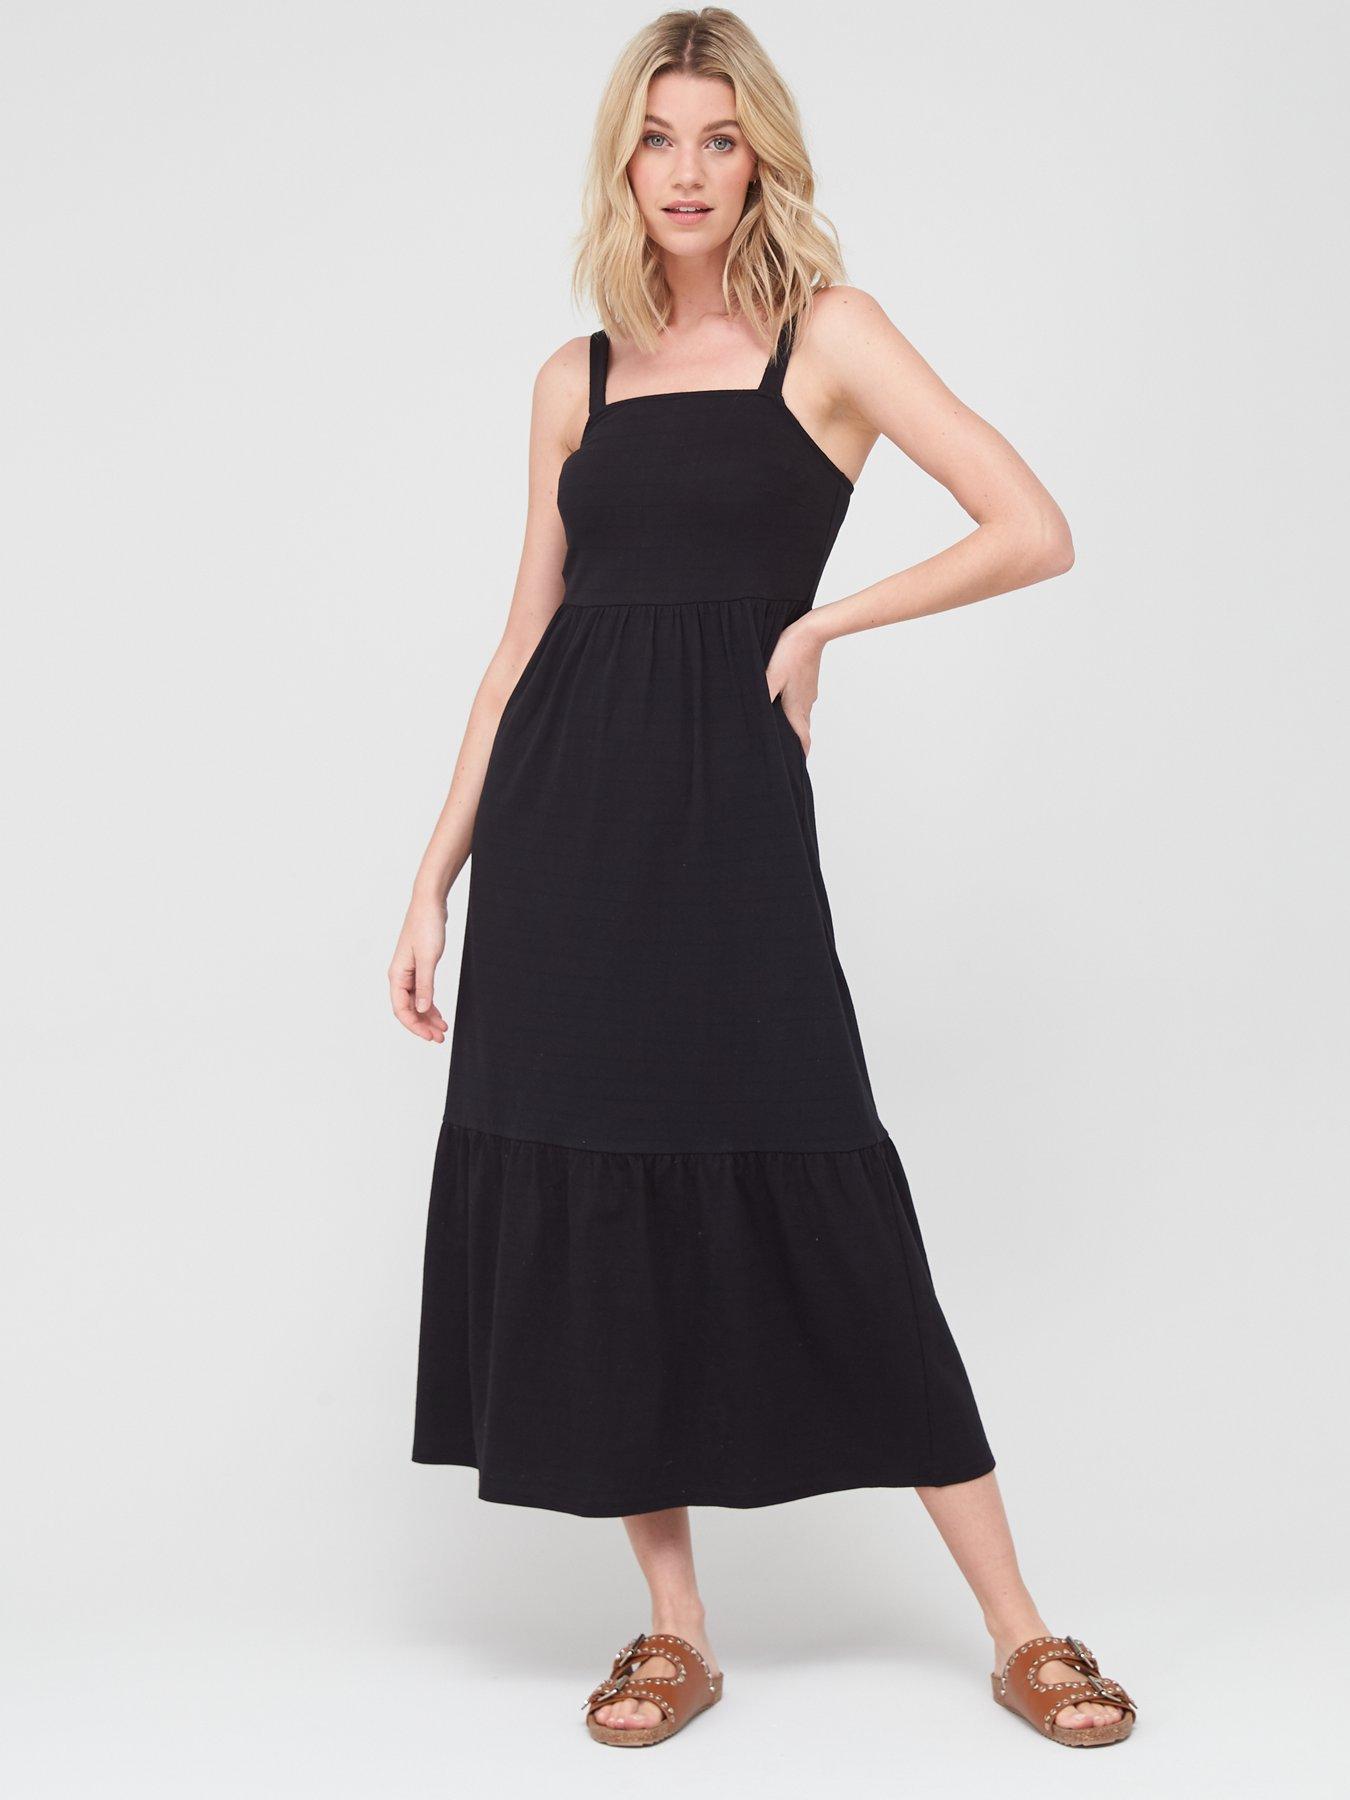 black sleeveless dress uk